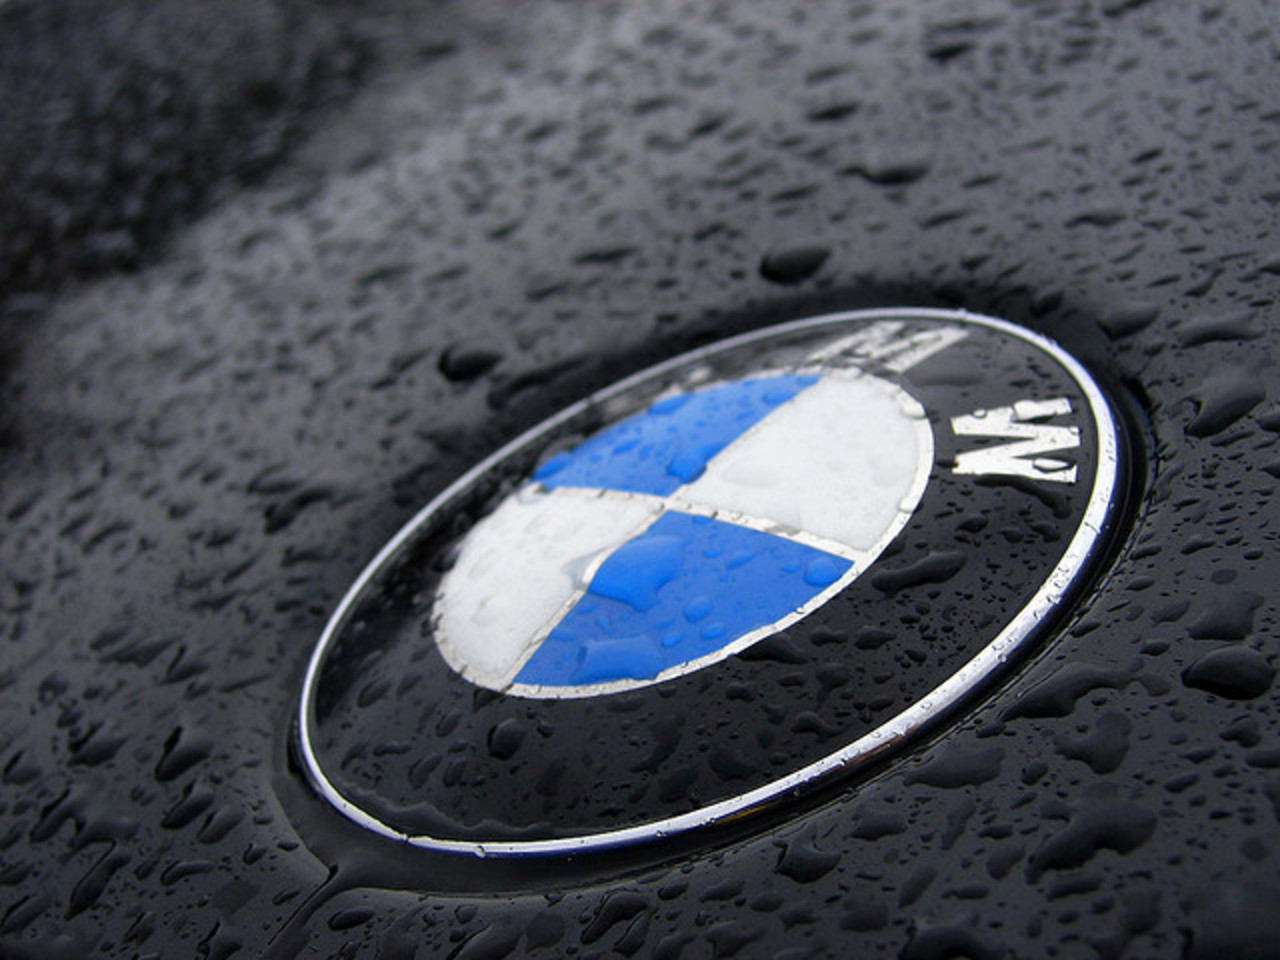 BMW 645 Ci | Flickr - Photo Sharing!